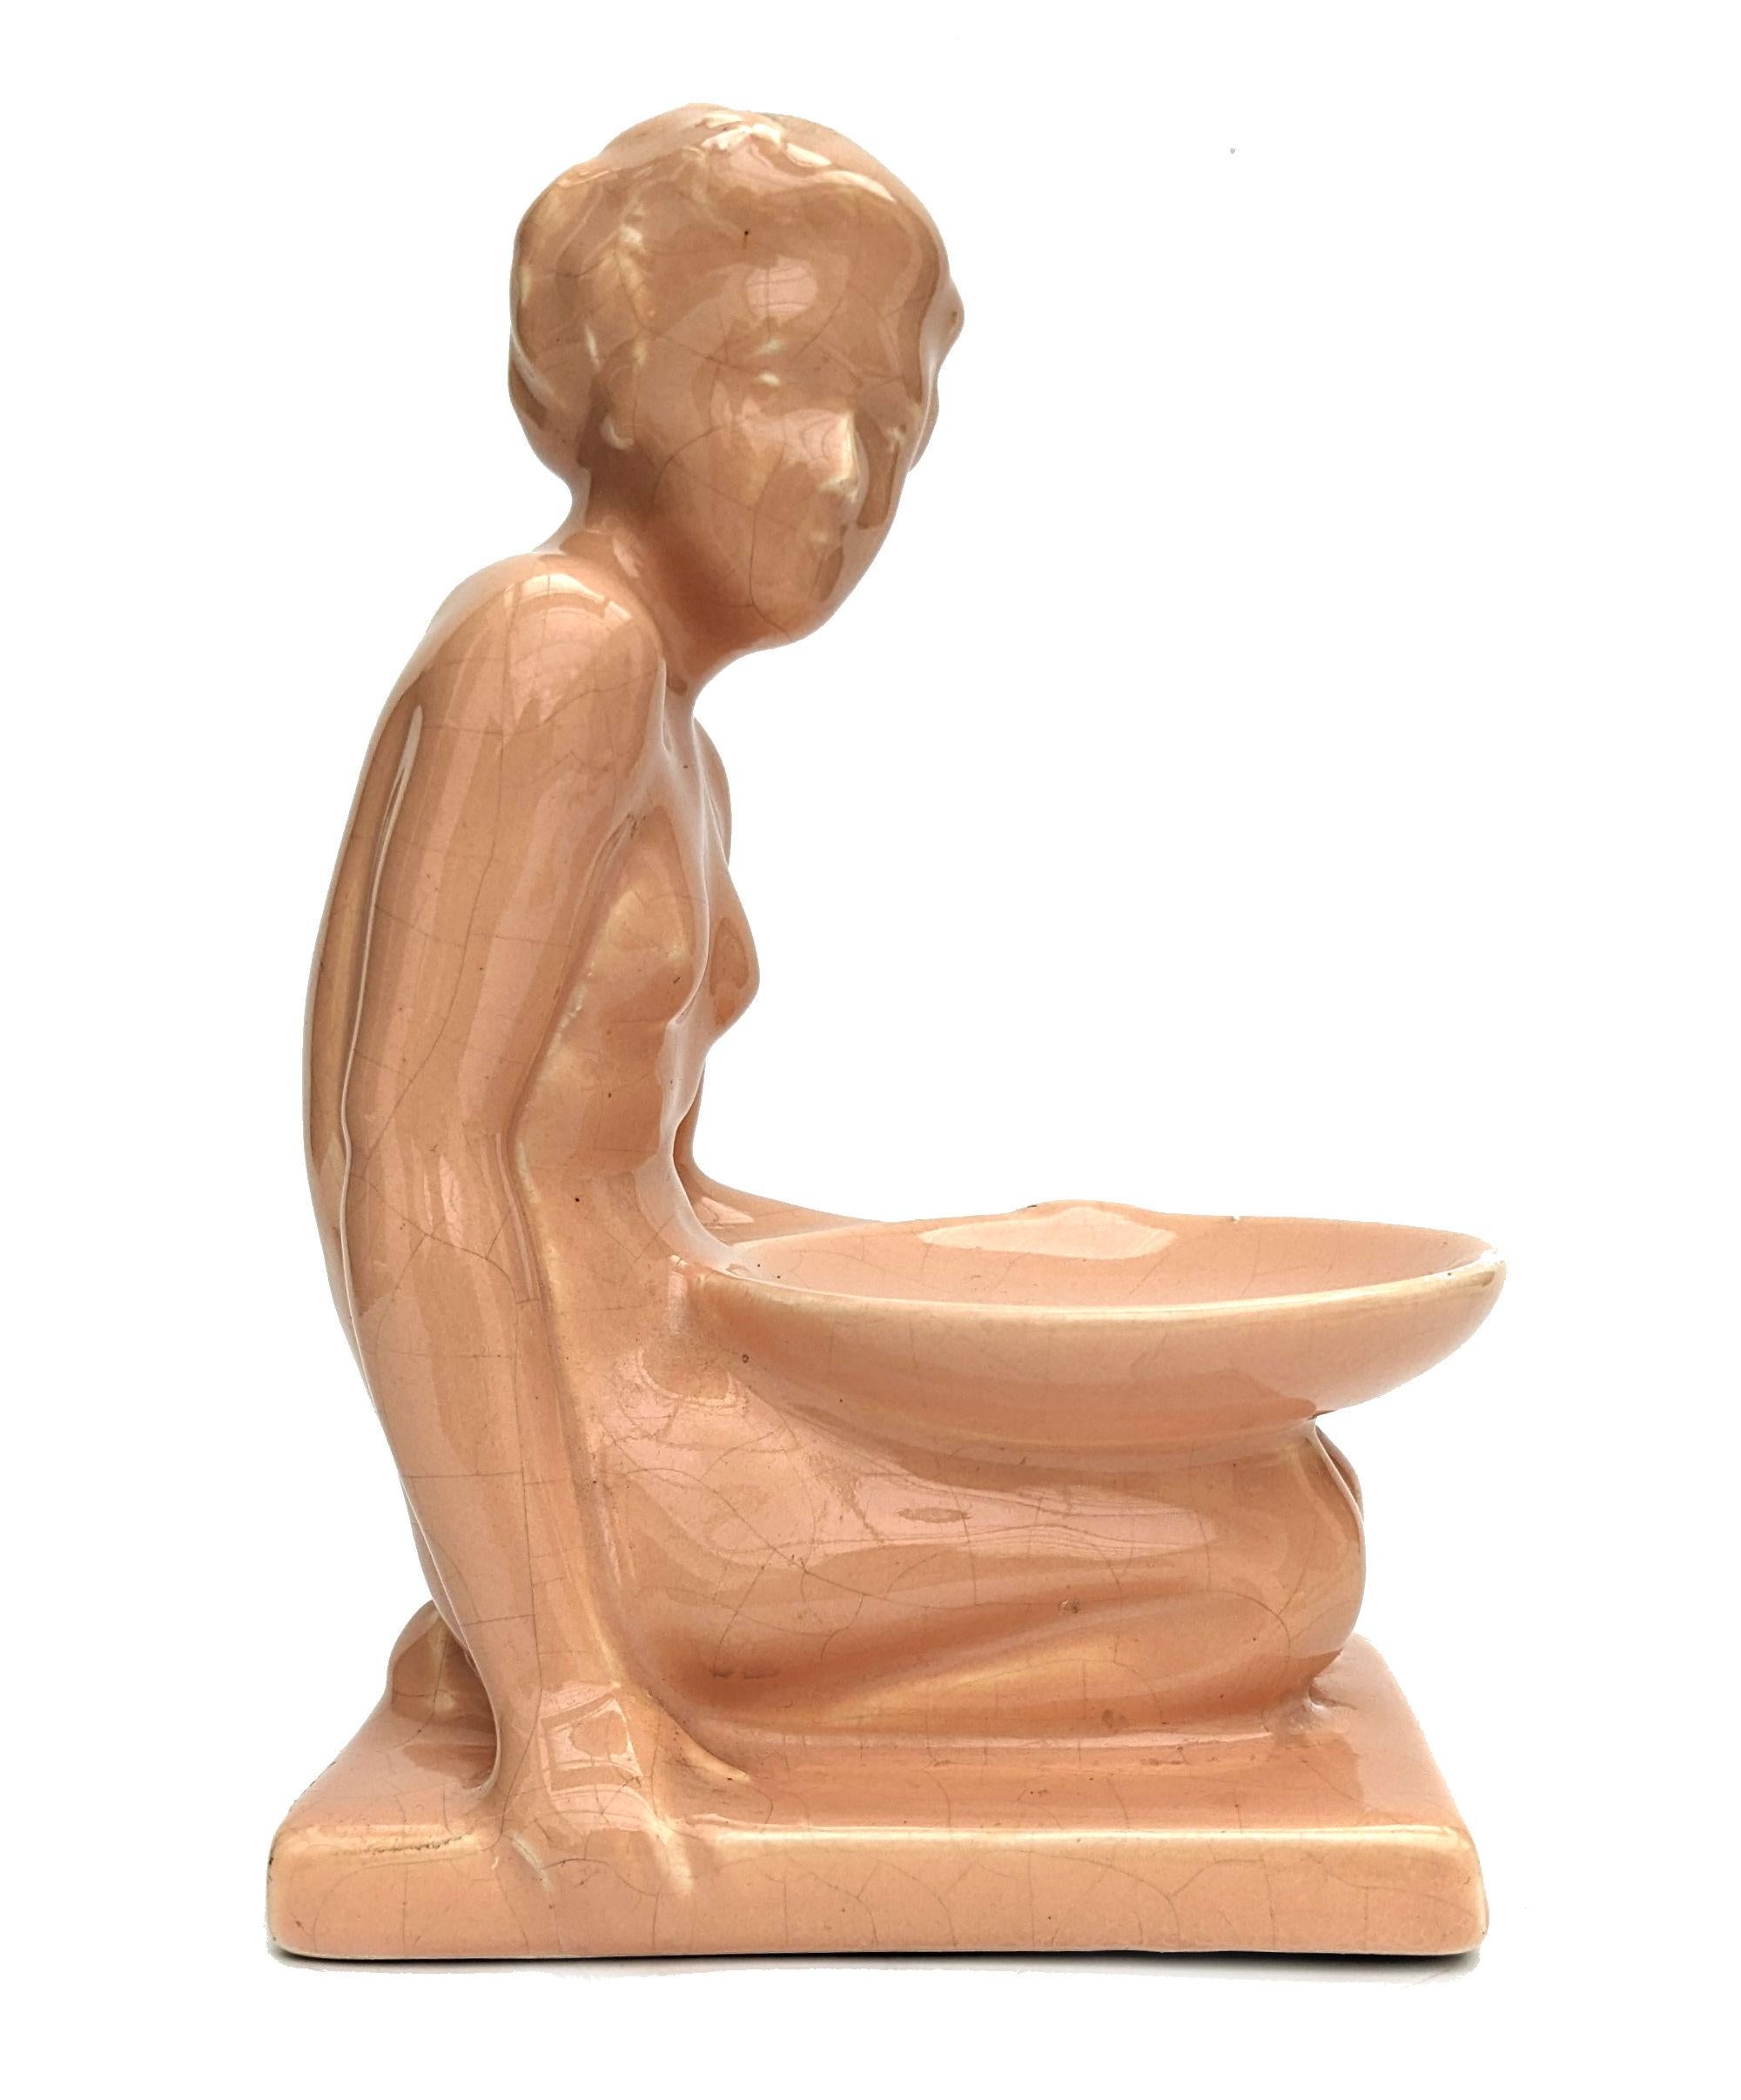 20th Century Art Deco Crackle Glazed Female Ceramic Figure, c1930 For Sale